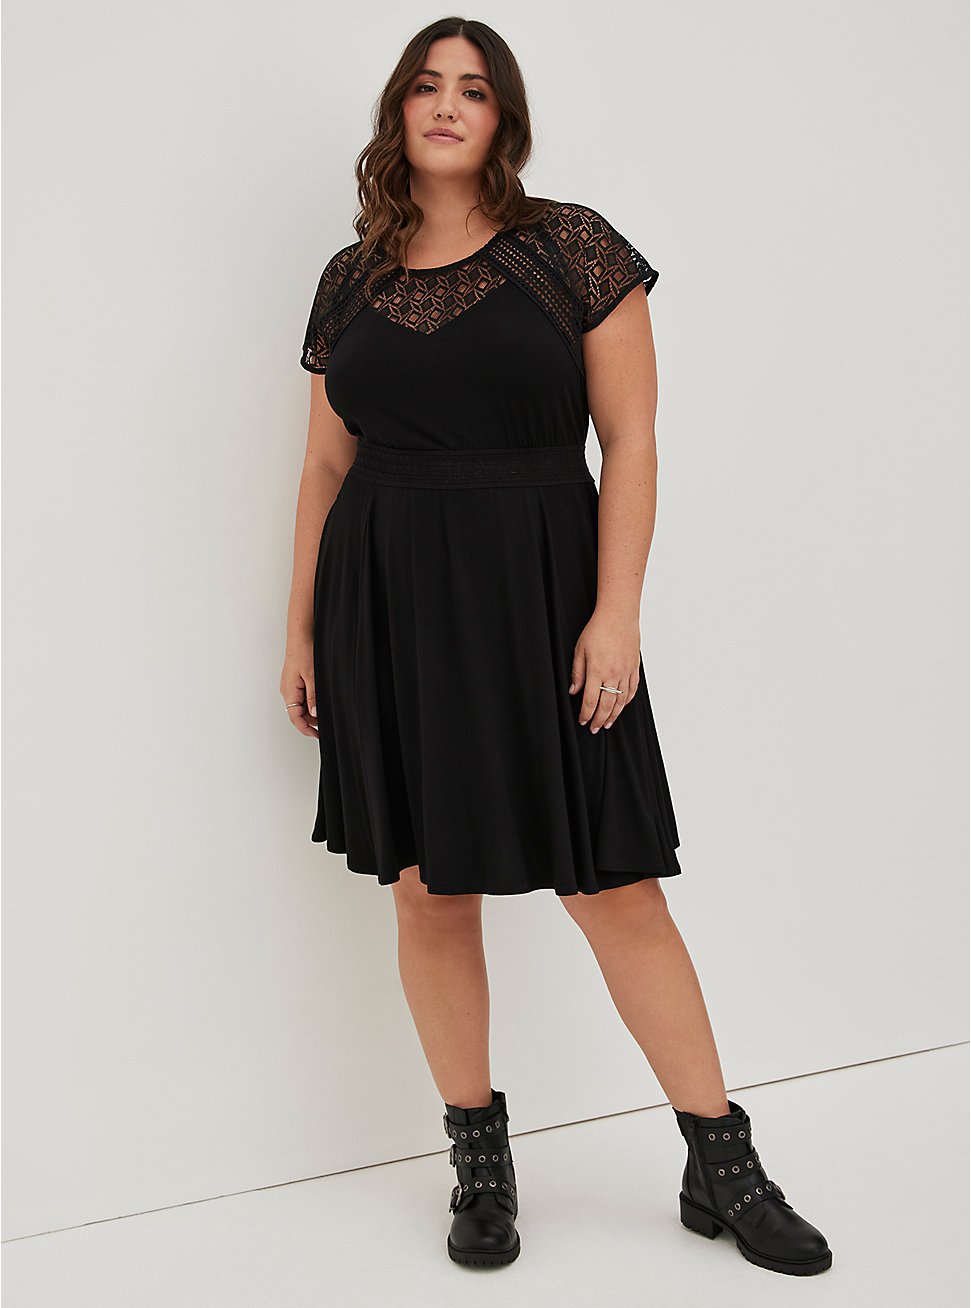 Dolman Crochet Sleeve Mini Dress - Super Soft Black, DEEP BLACK, hi-res